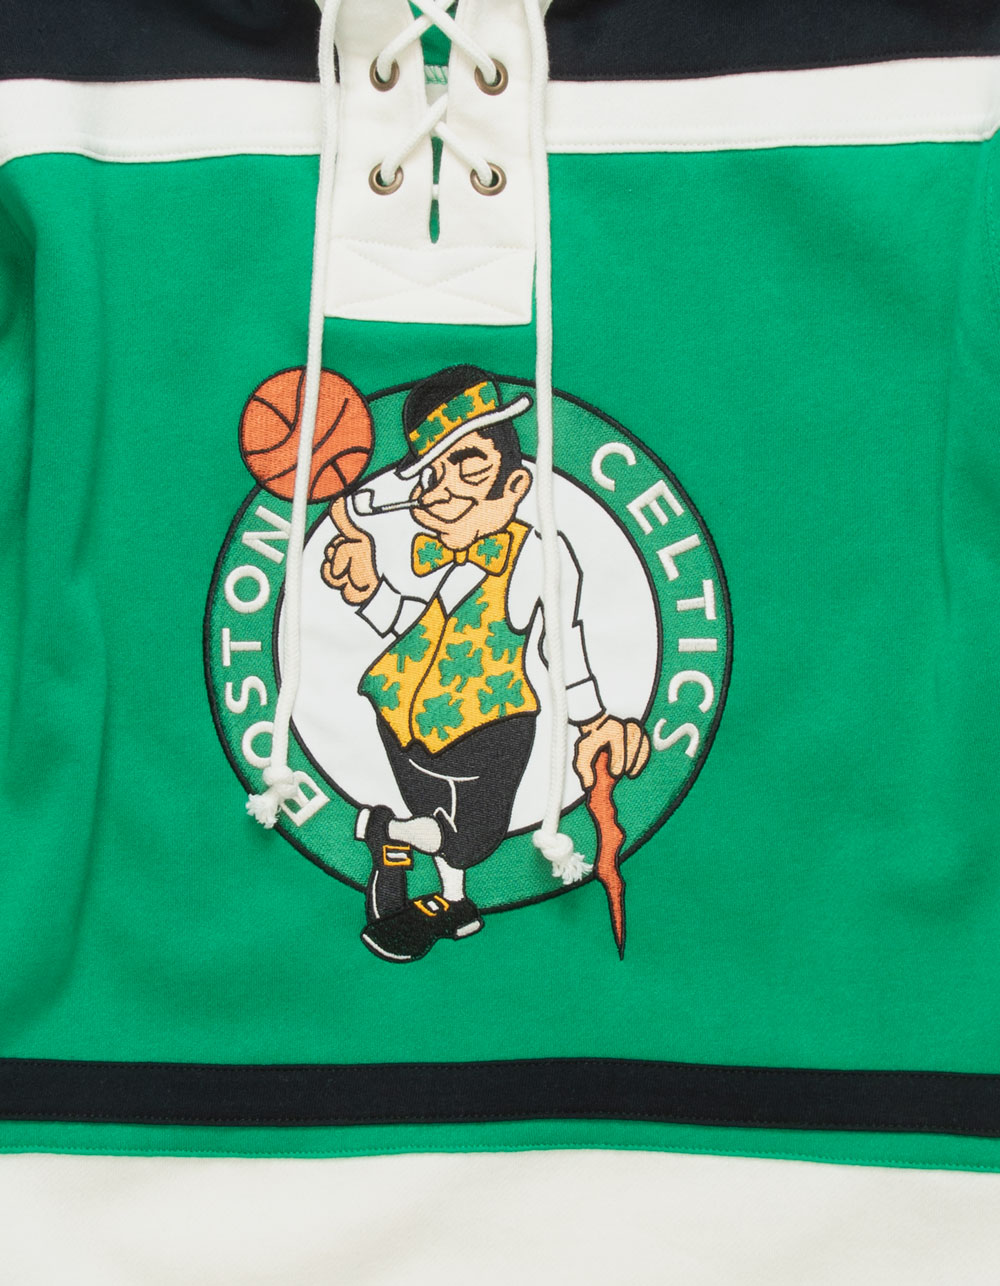 ‘47 Men's Boston Celtics Green Lacer Hoodie, Large